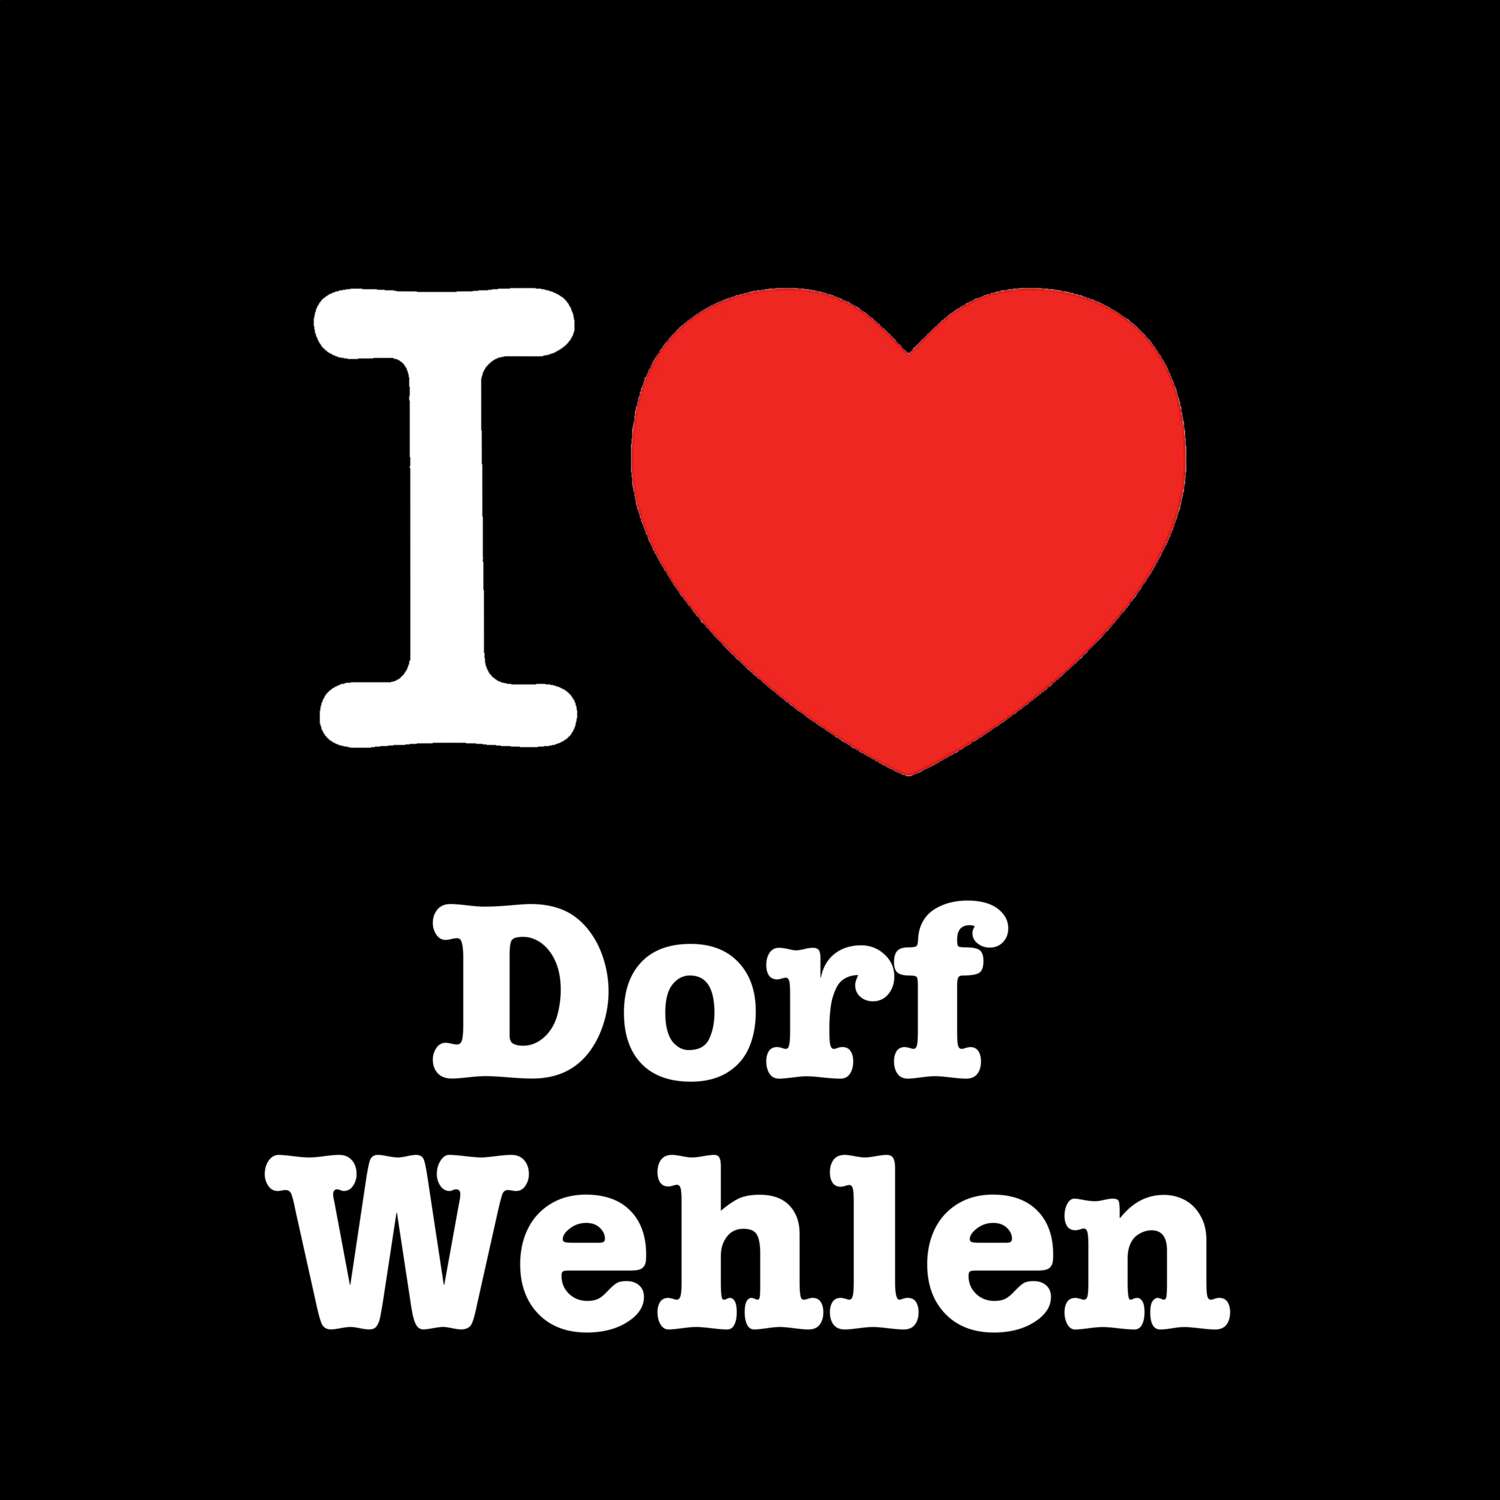 Dorf Wehlen T-Shirt »I love«